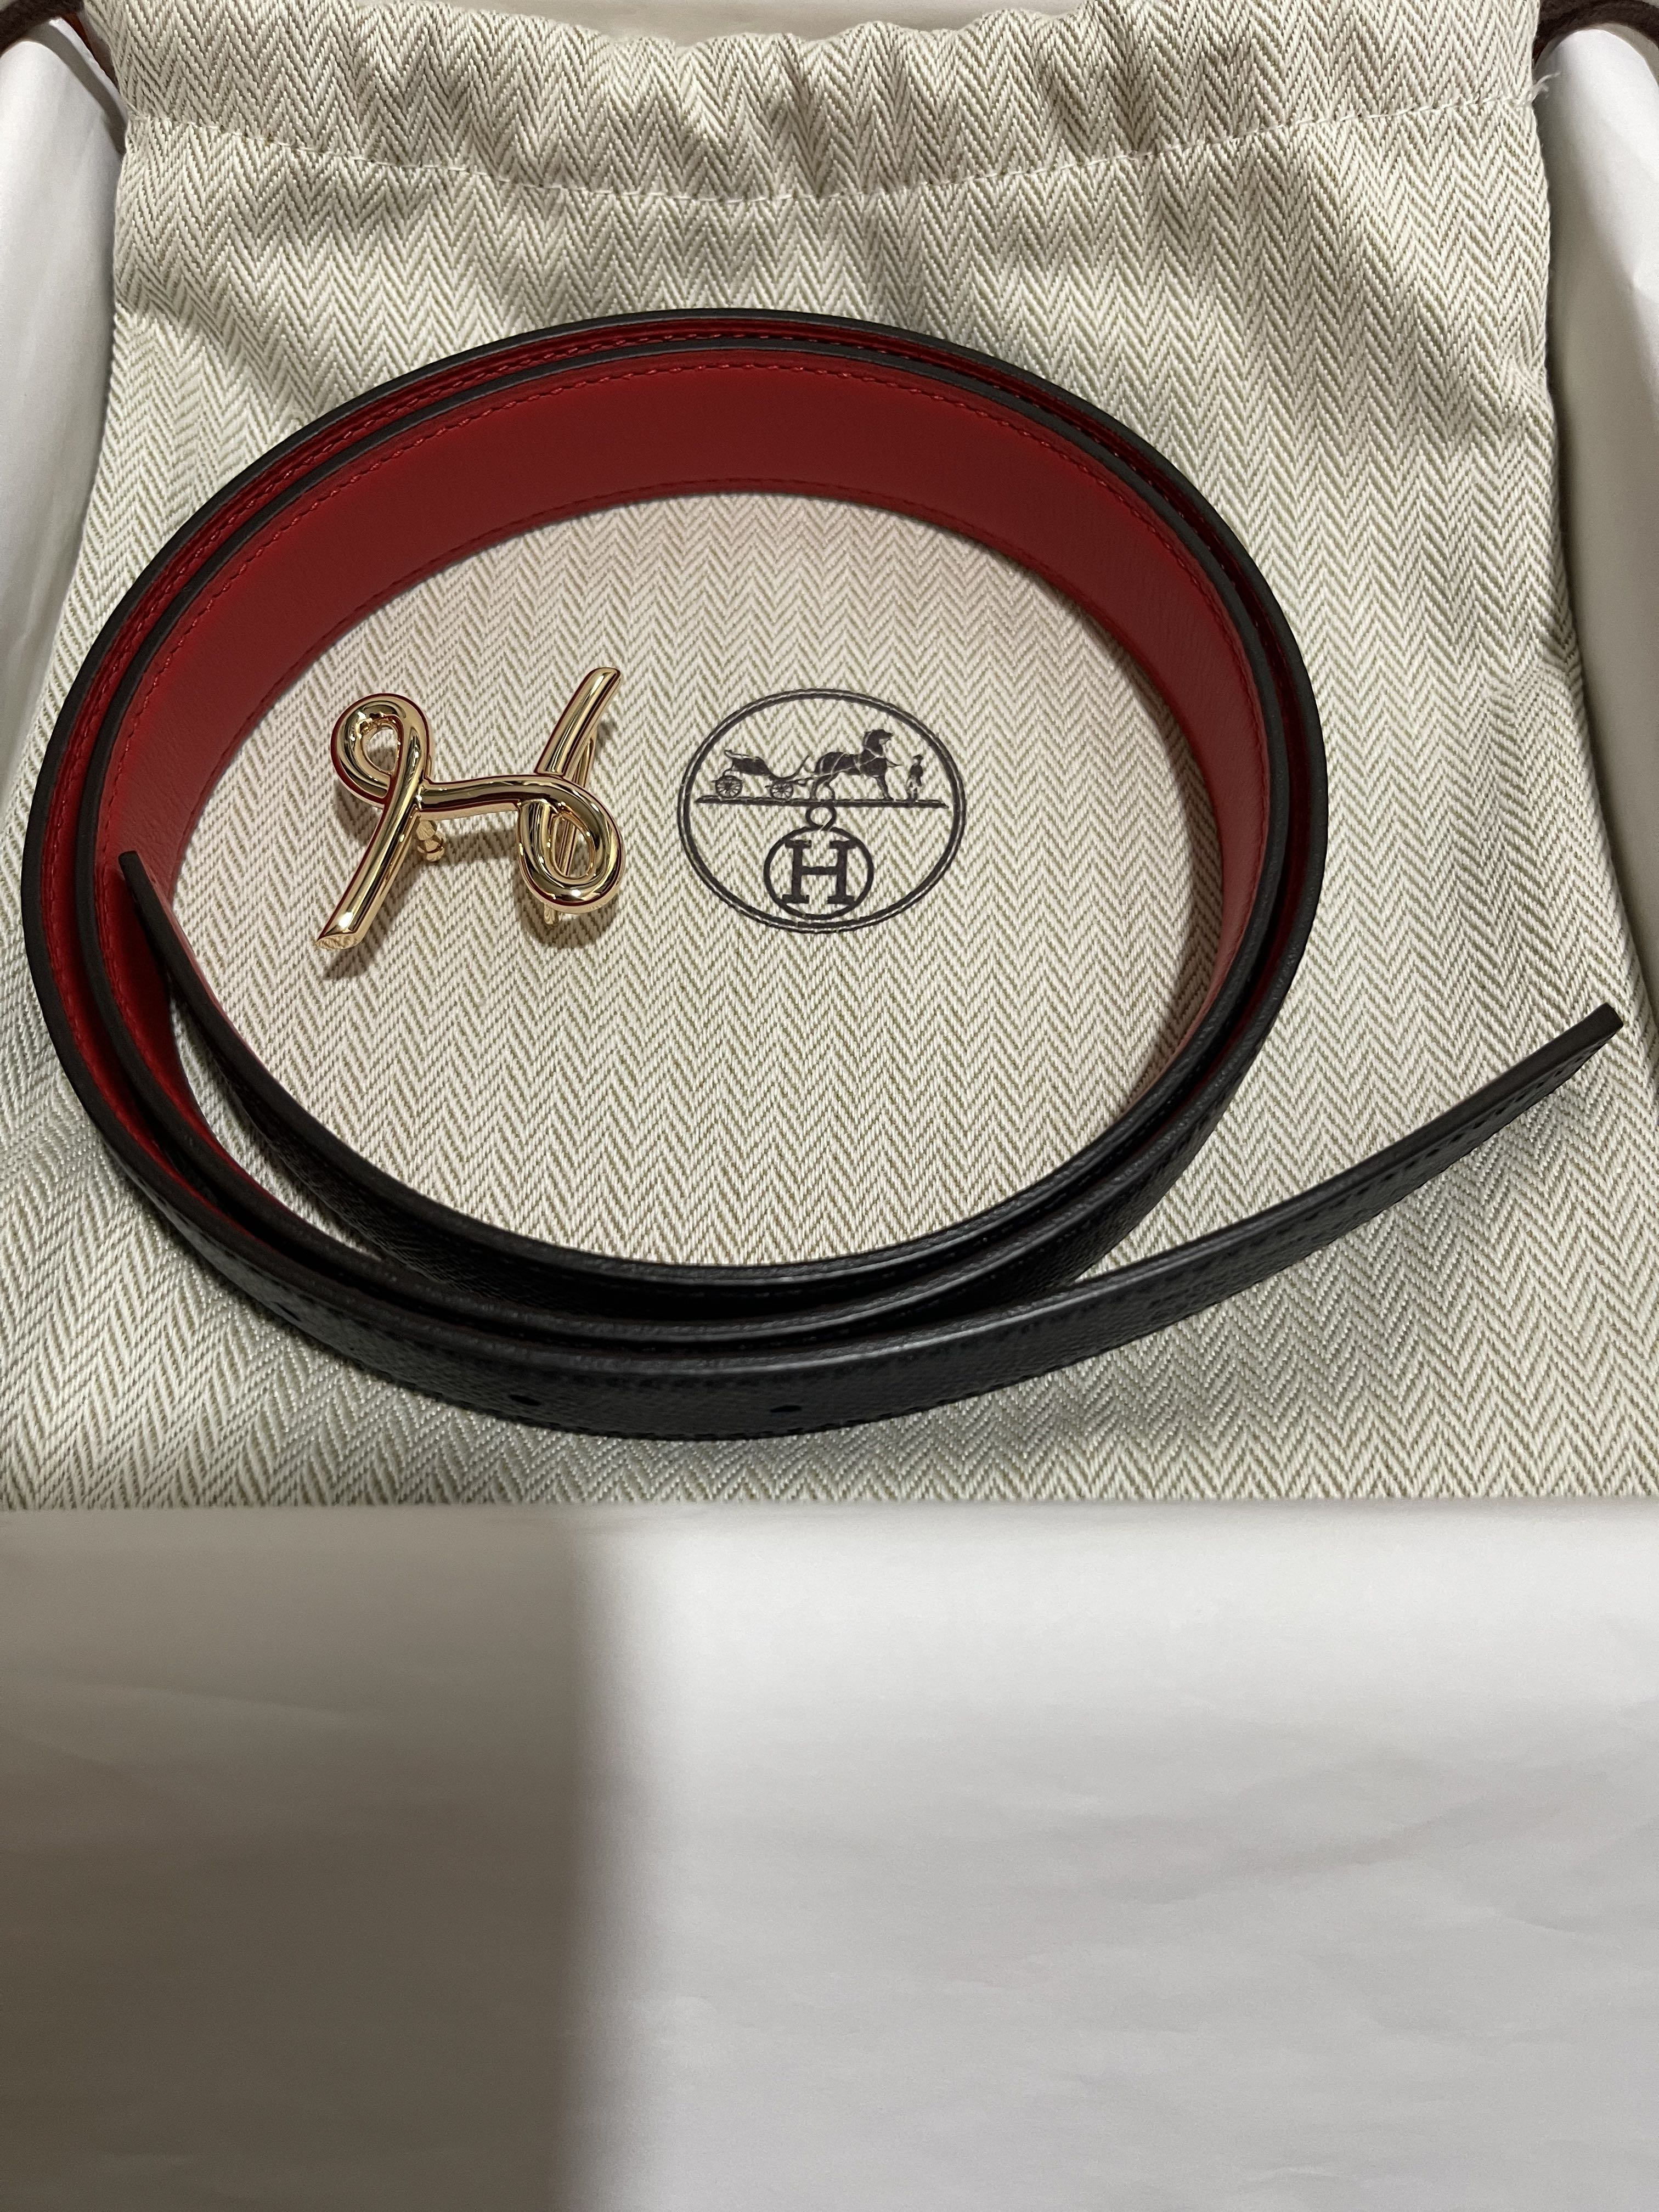 H Cursives belt buckle & Reversible leather strap 24 mm